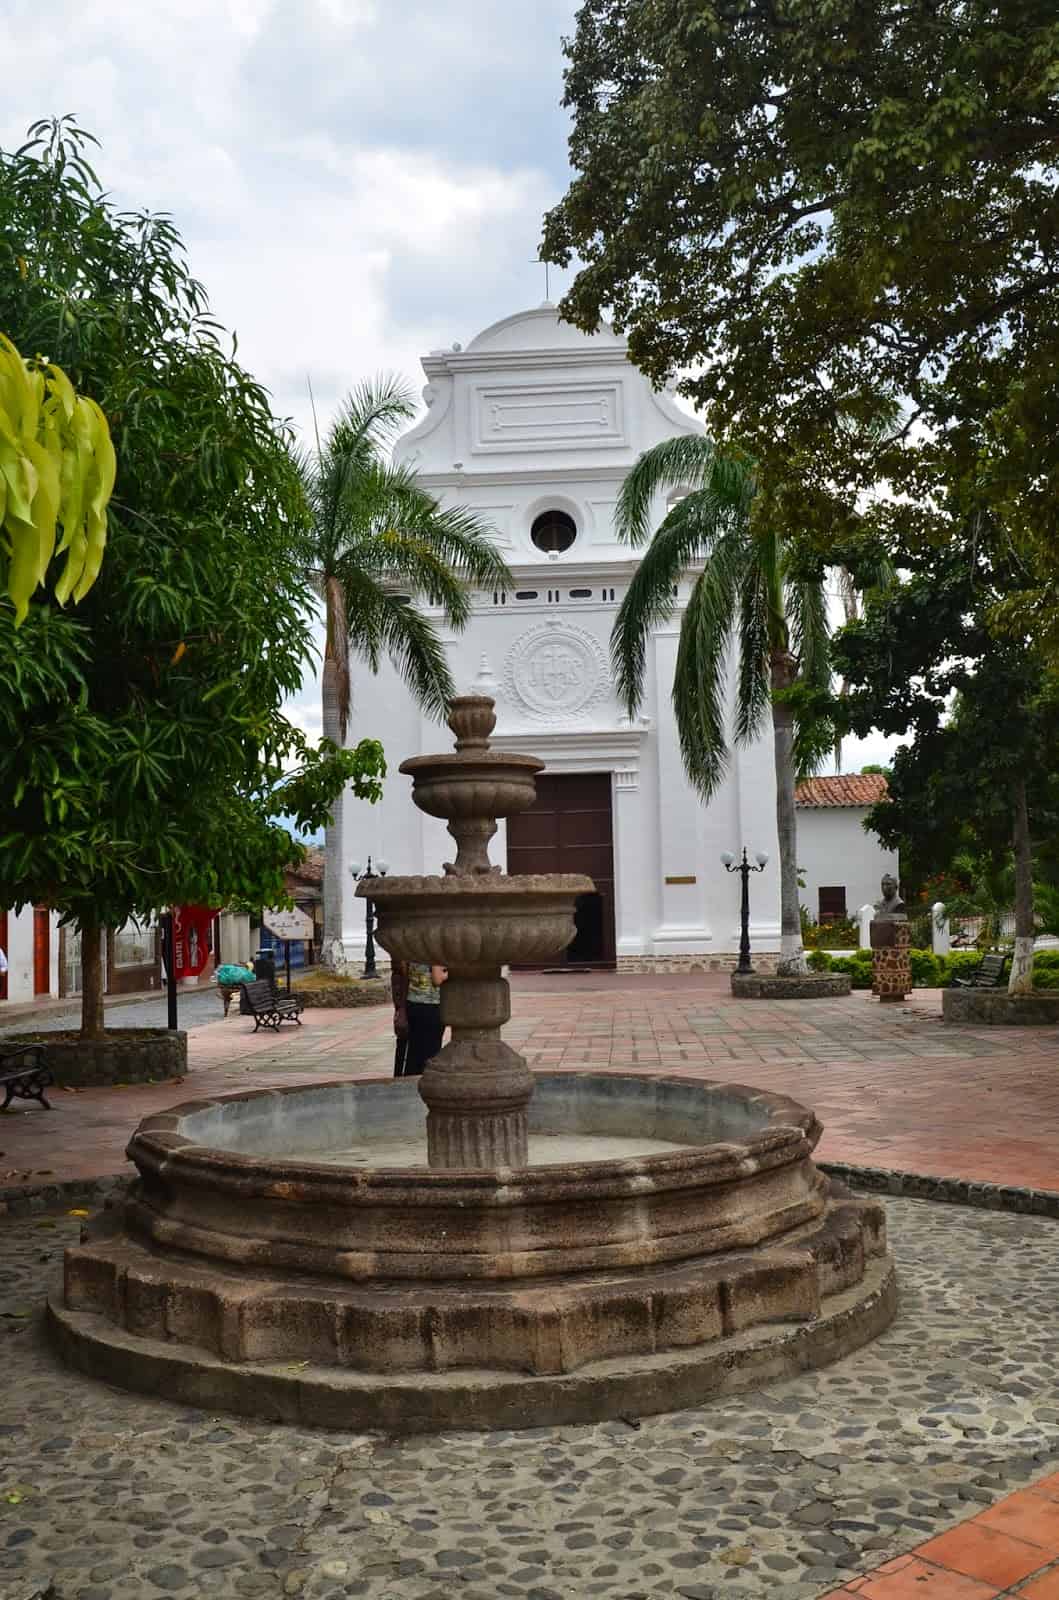 Church of Jesus of Nazareth in Santa Fe de Antioquia, Colombia